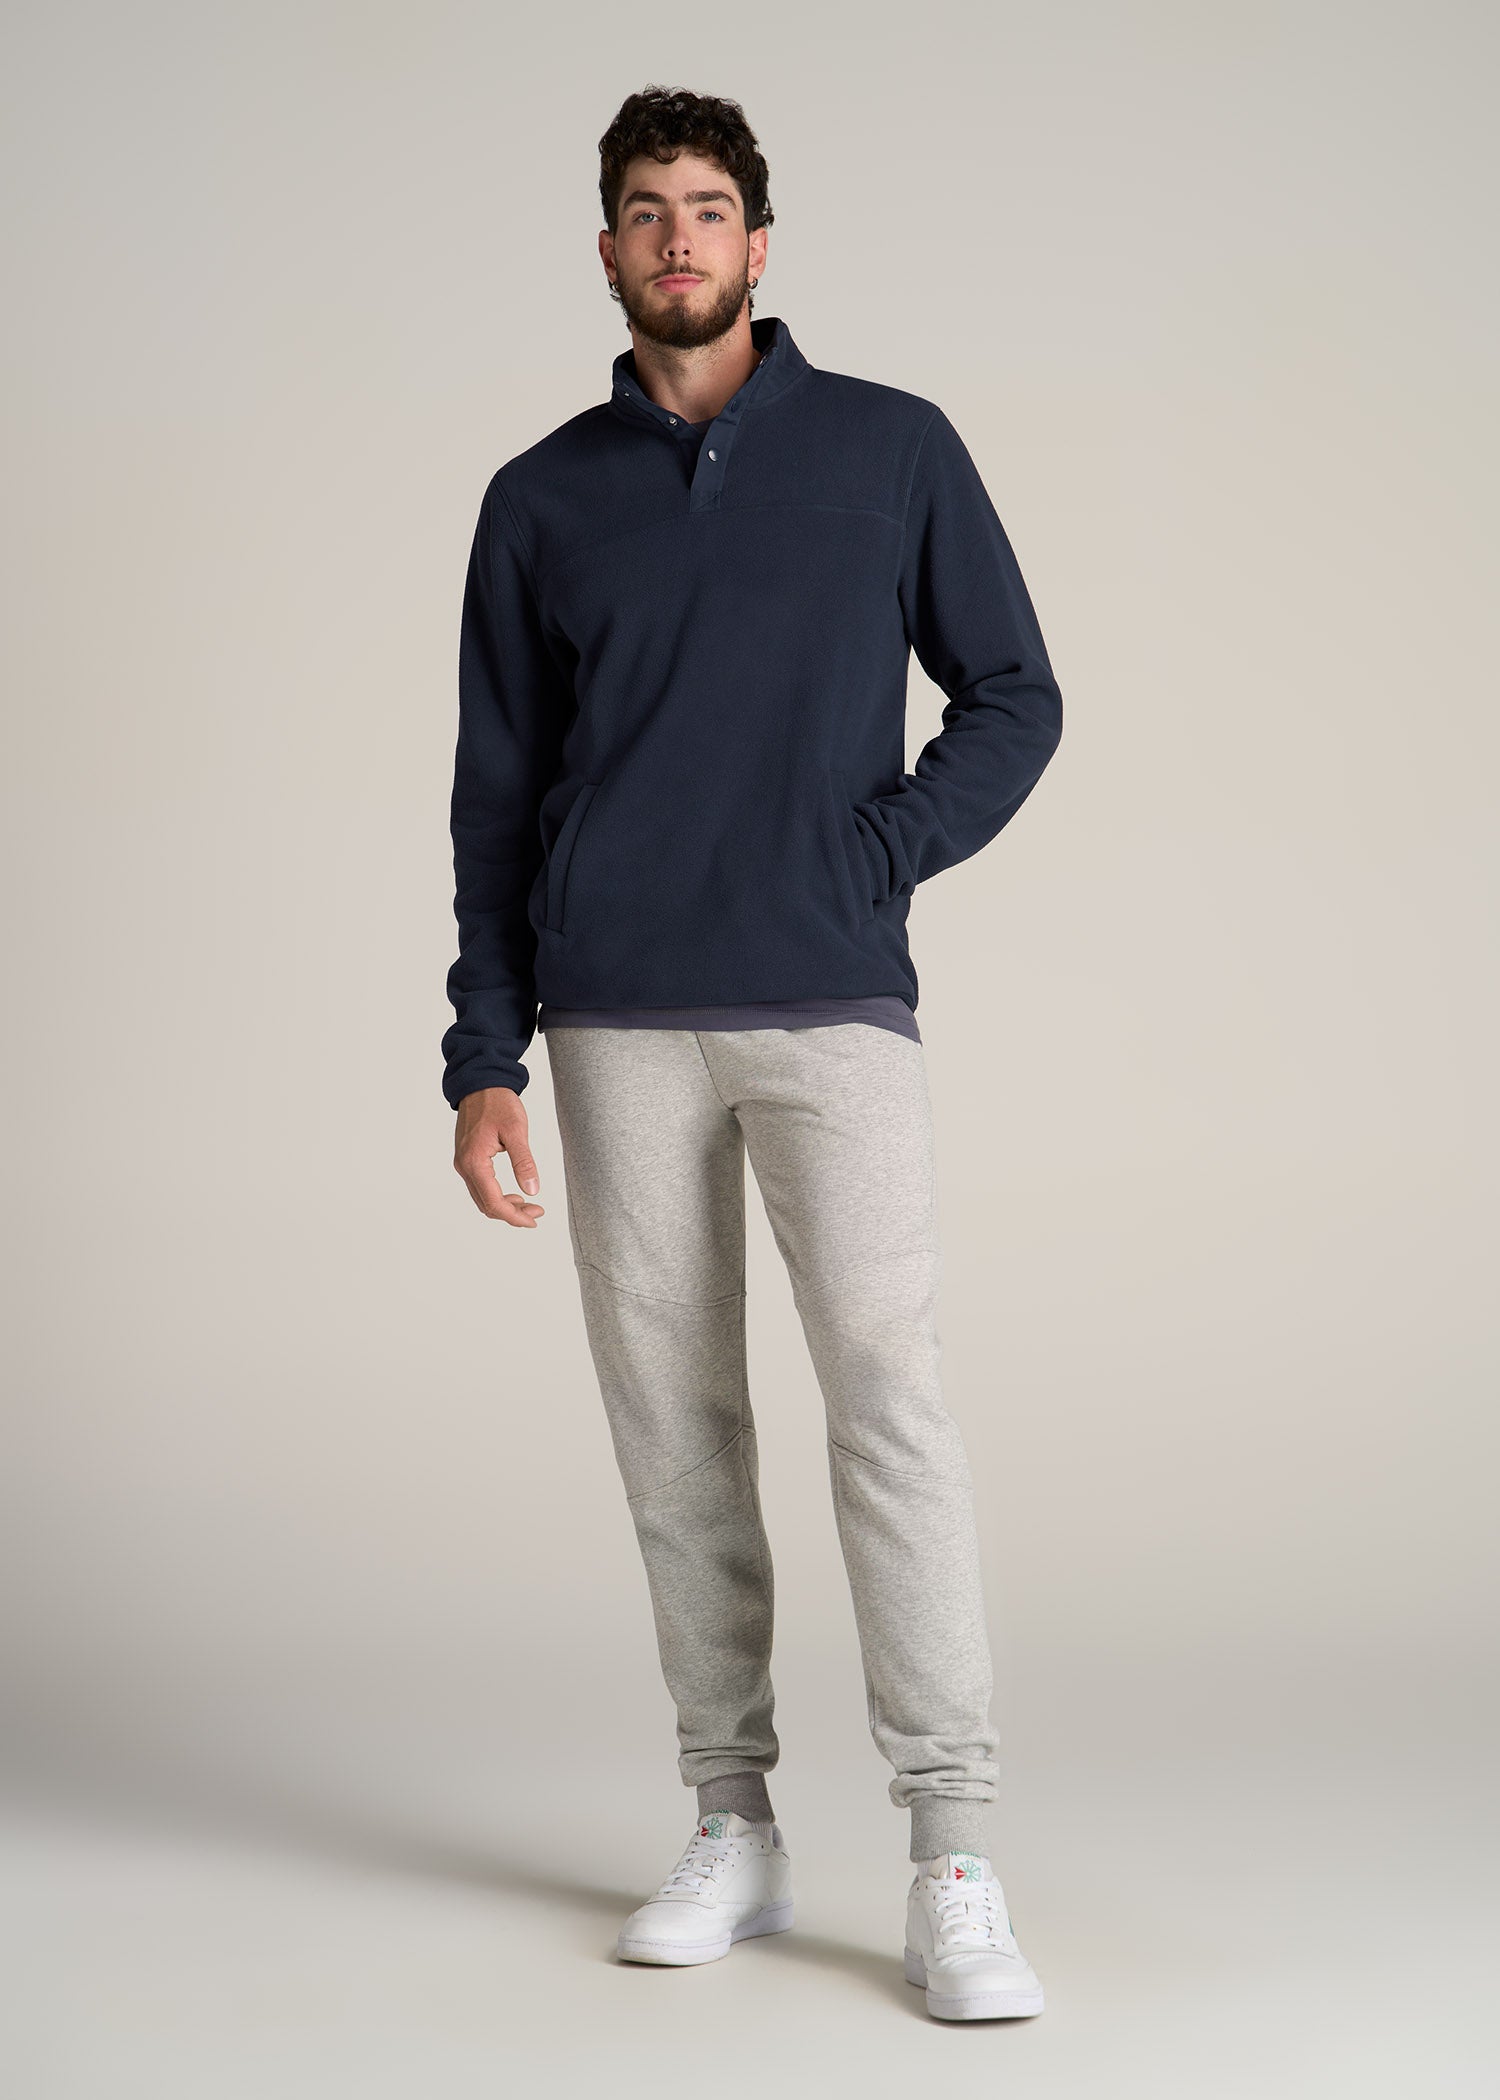 Men's Tall Hoodies & Sweatshirts | American Tall